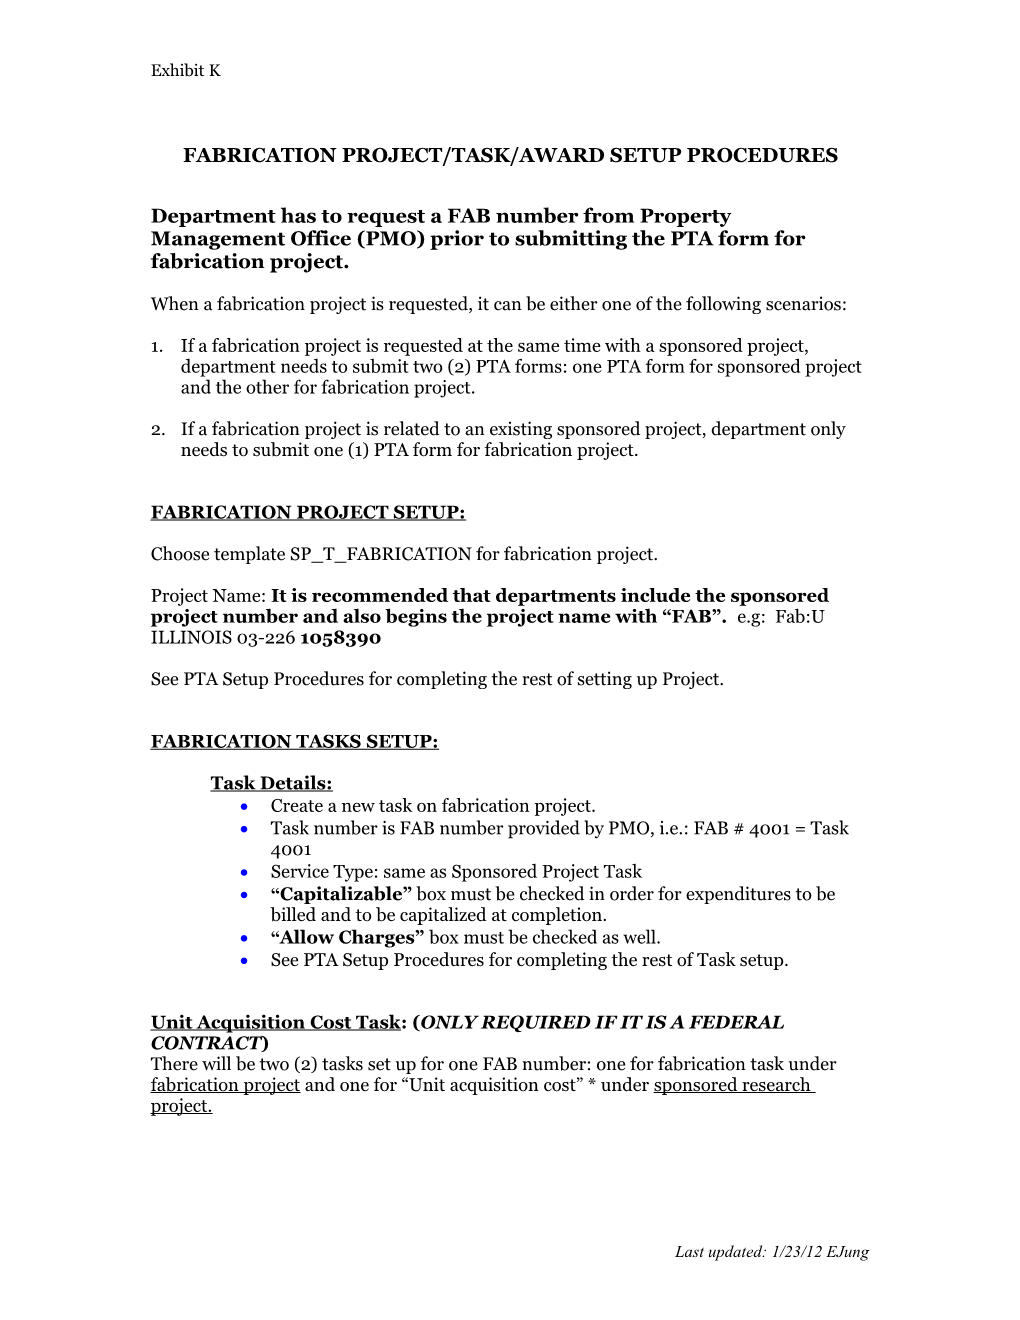 Fabrication Project/Task/Award Setup Procedures